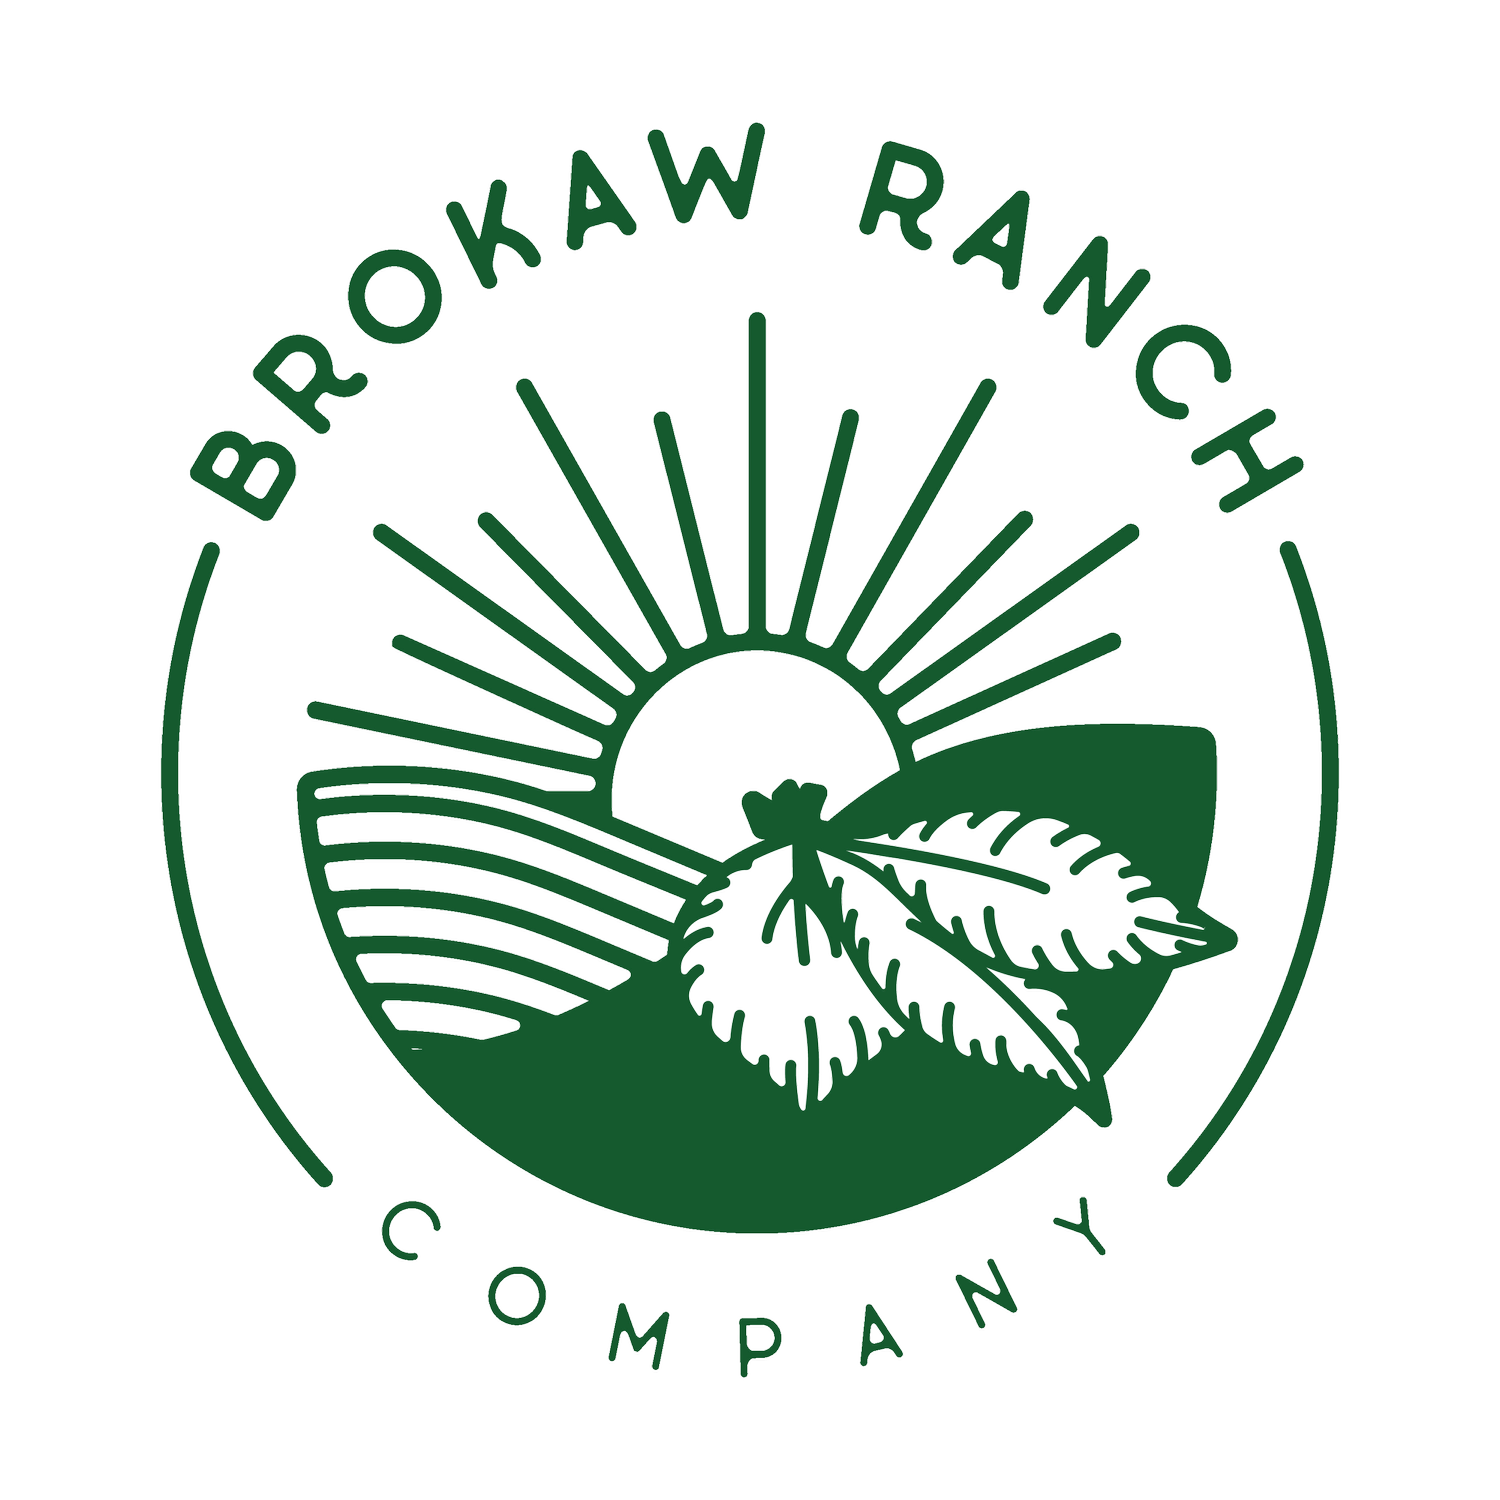 Brokaw Ranch Company